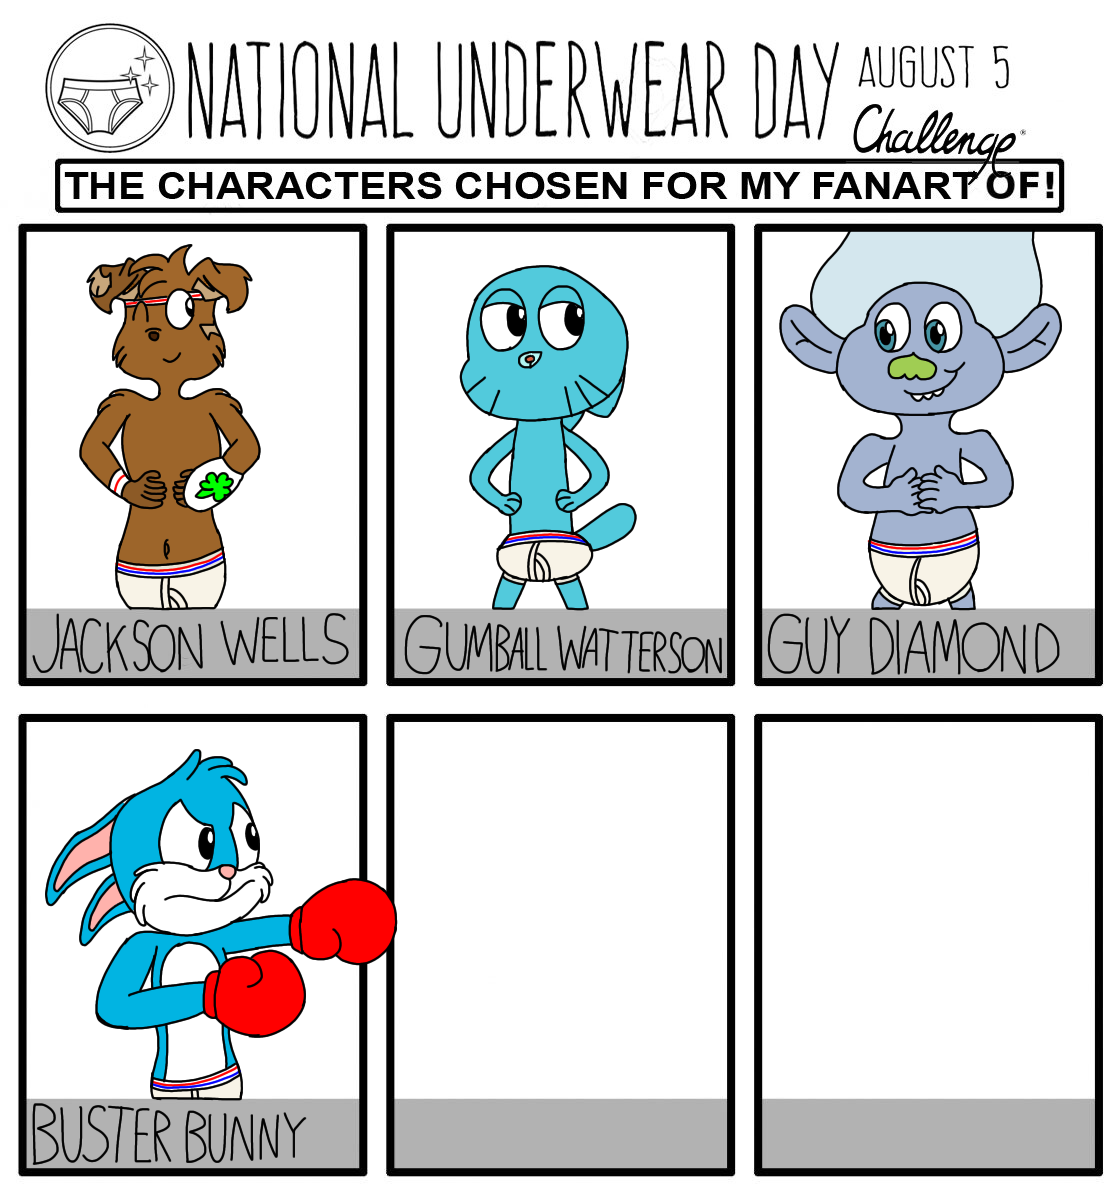 National Underwear Day Characters by xXMCUFan2020Xx on DeviantArt